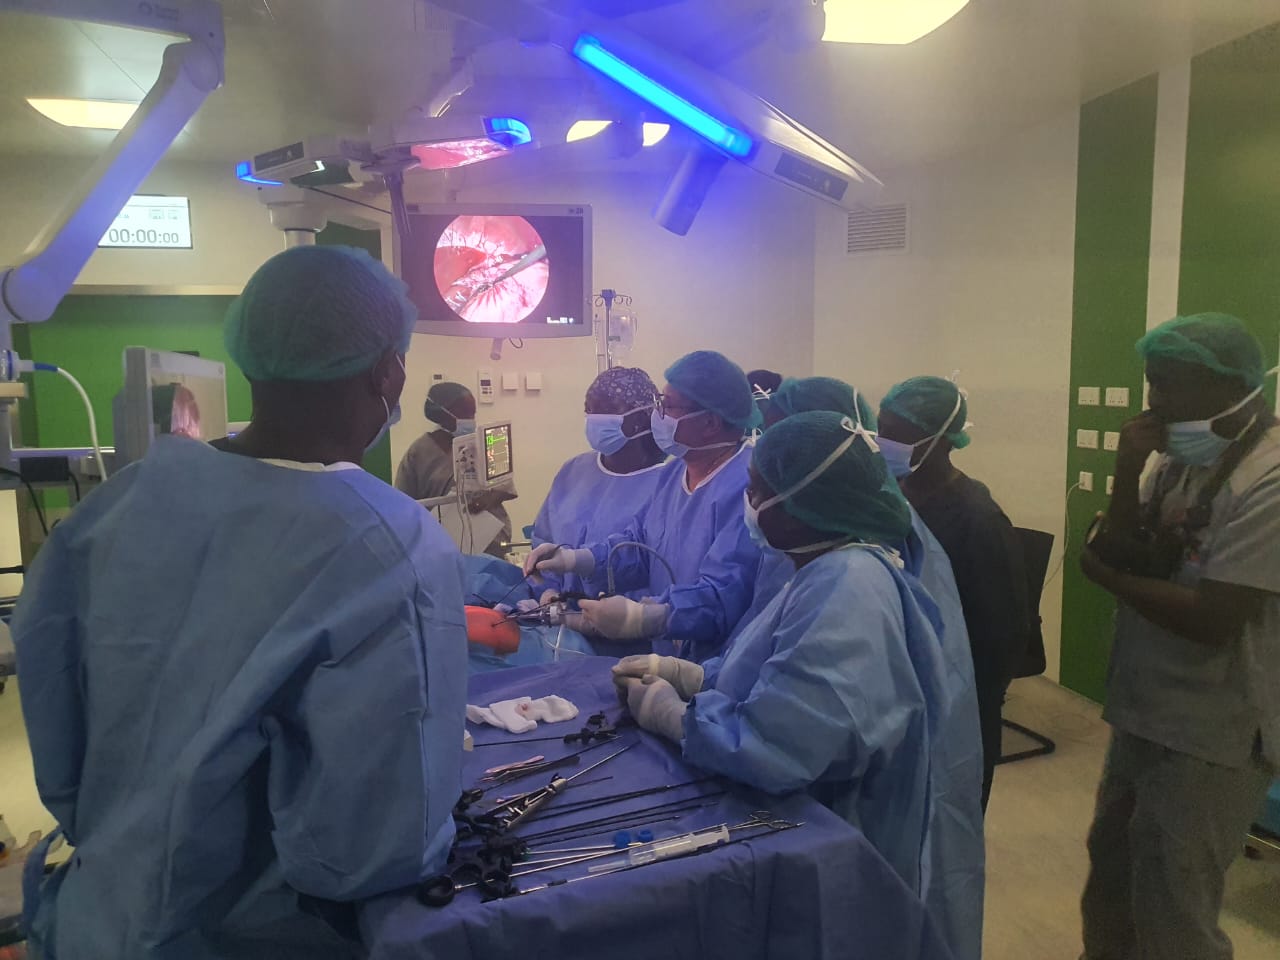 UoN Paediatric Surgery Residents Dr Sarah and Dr Rania assisting Professor Ashwin in live paediatric laparoscopic surgery